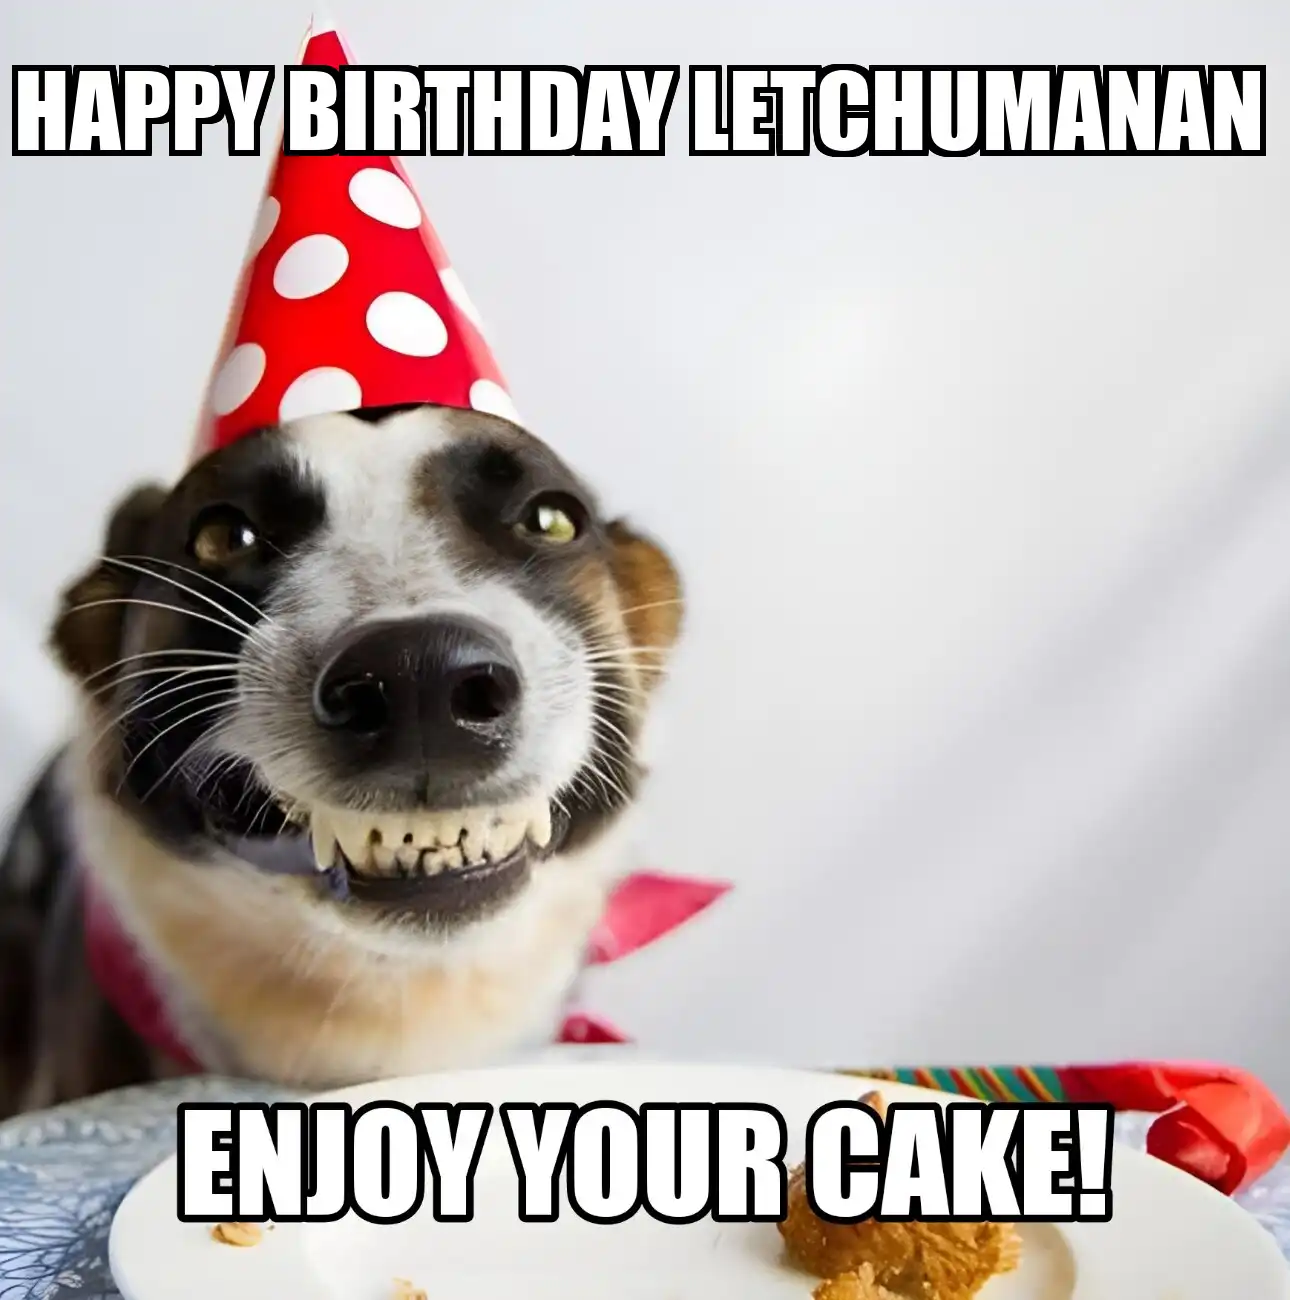 Happy Birthday Letchumanan Enjoy Your Cake Dog Meme